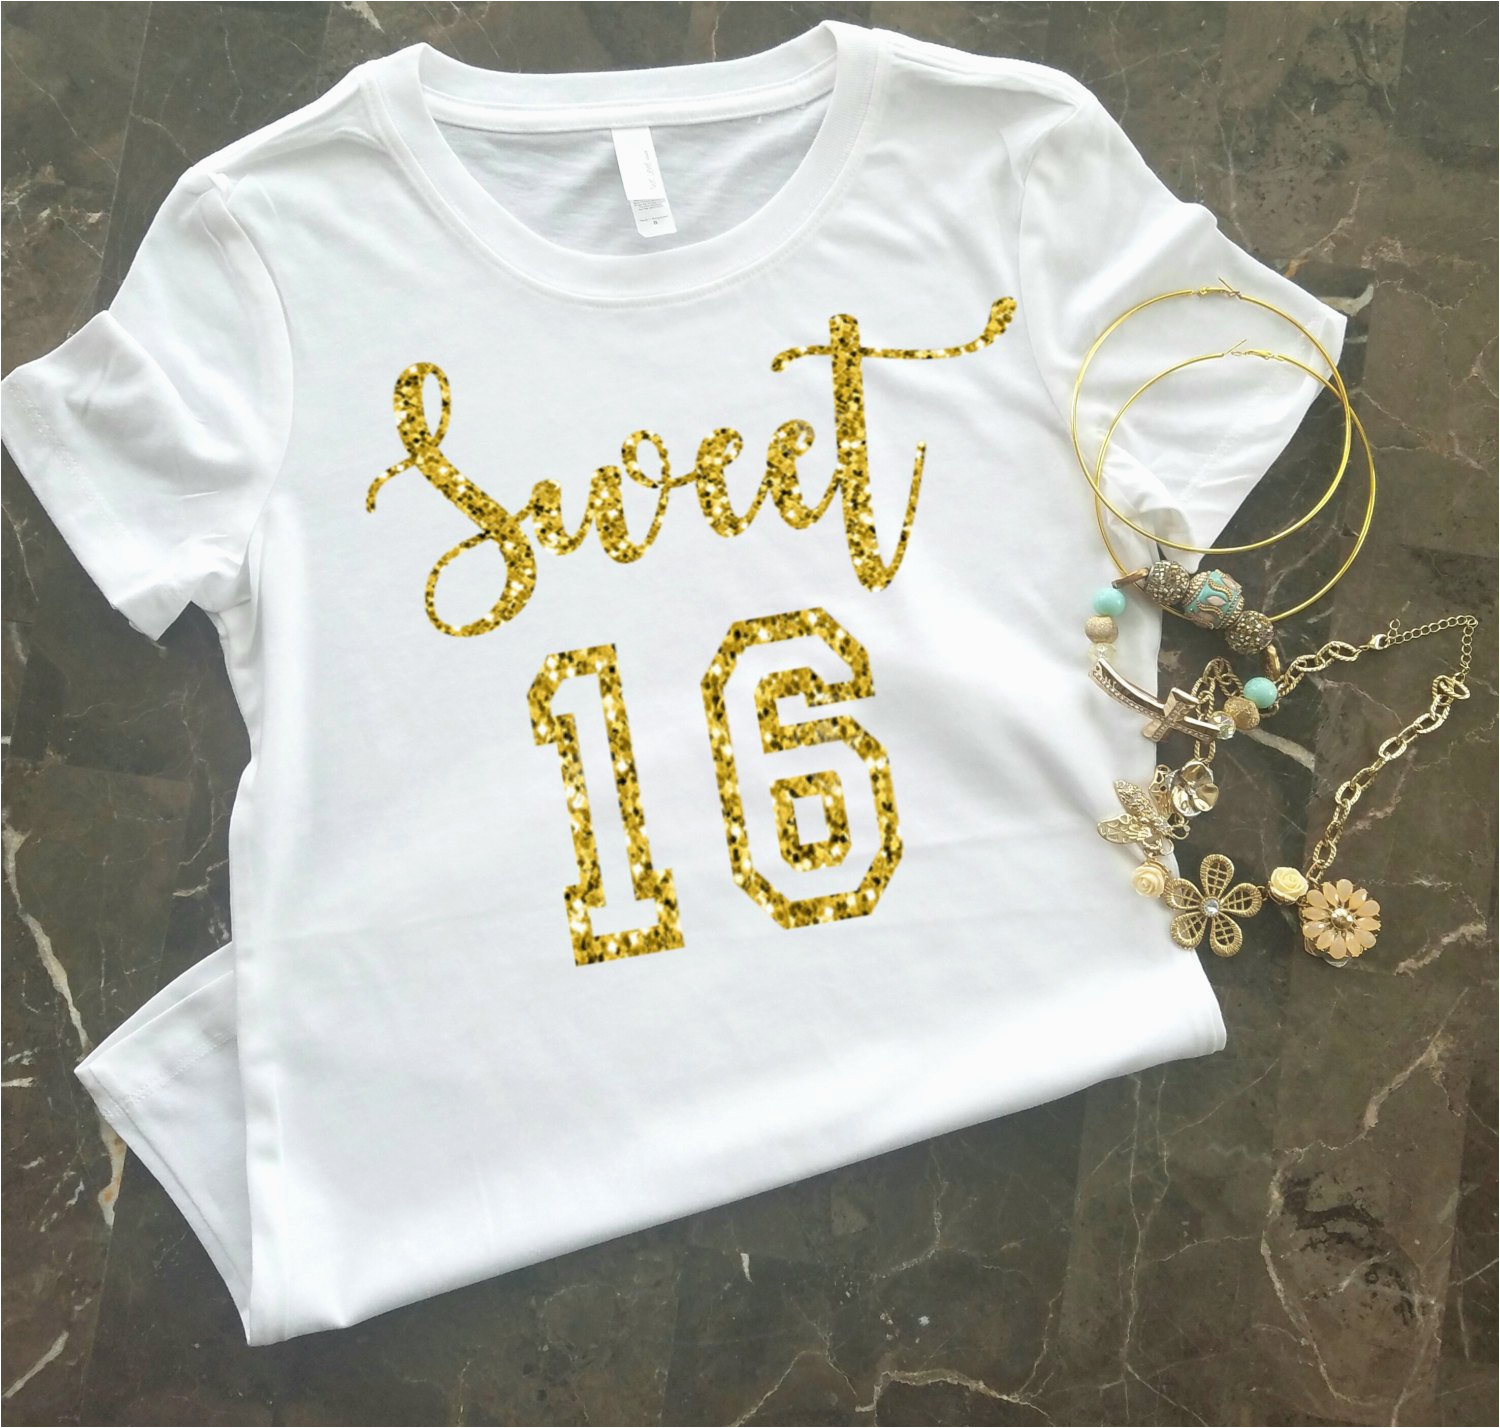 Birthday Girl Shirt 16 Sweet 16 Shirt Birthday Girl Shirt Sweet Sixteen Shirt 16th